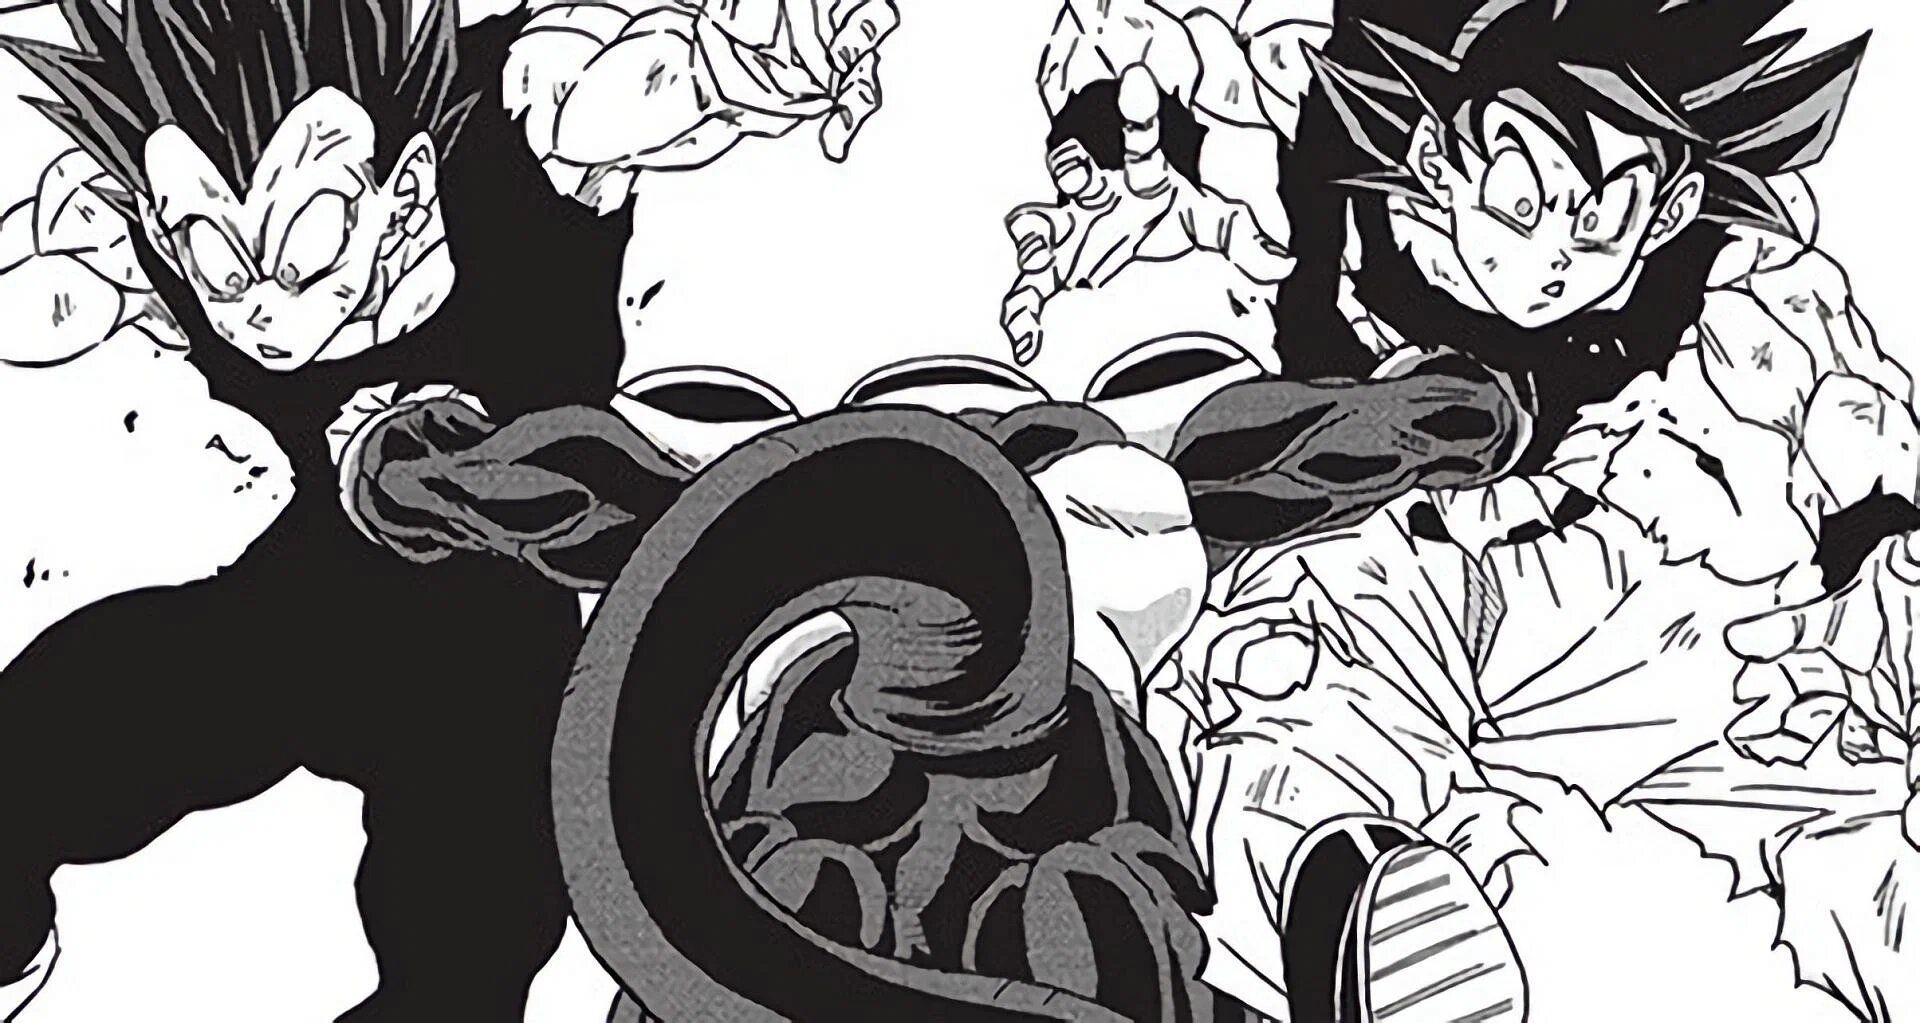 Black Frieza overpowering Goku and Vegeta in the Dragon Ball Super manga (Image via Shueisha)